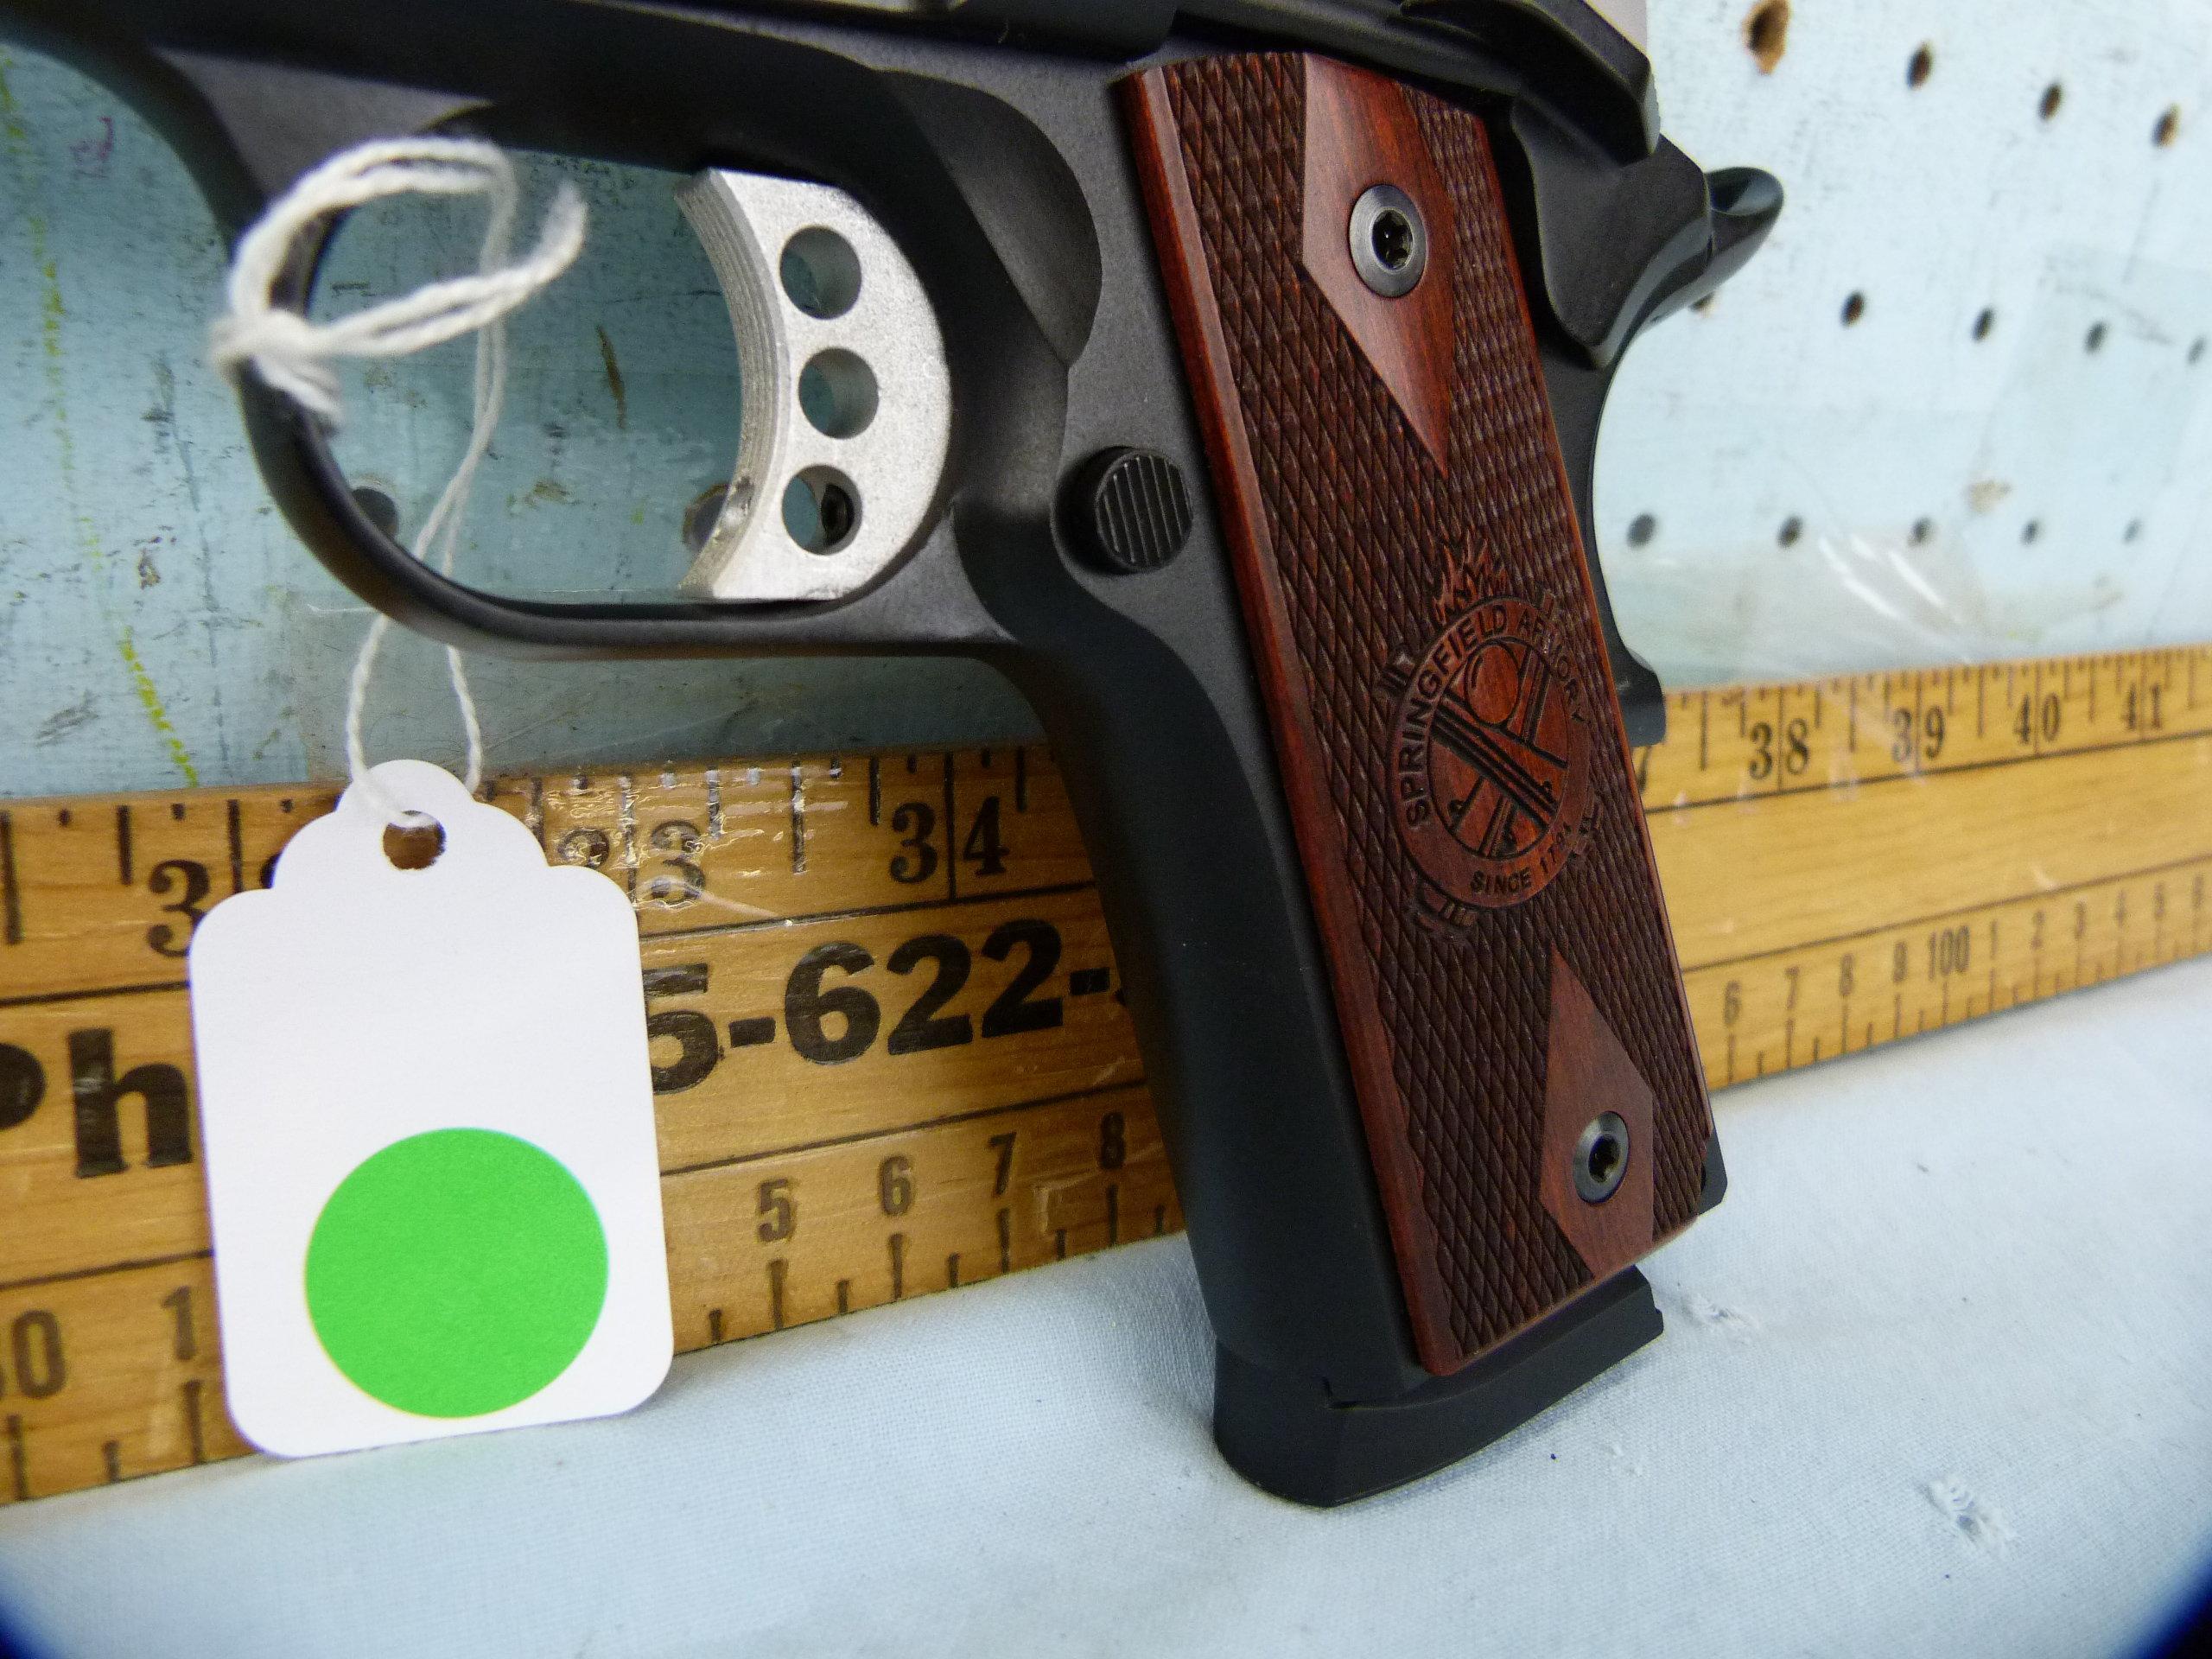 Springfield EMP SA Pistol, 40 S&W, SN: EMP5390